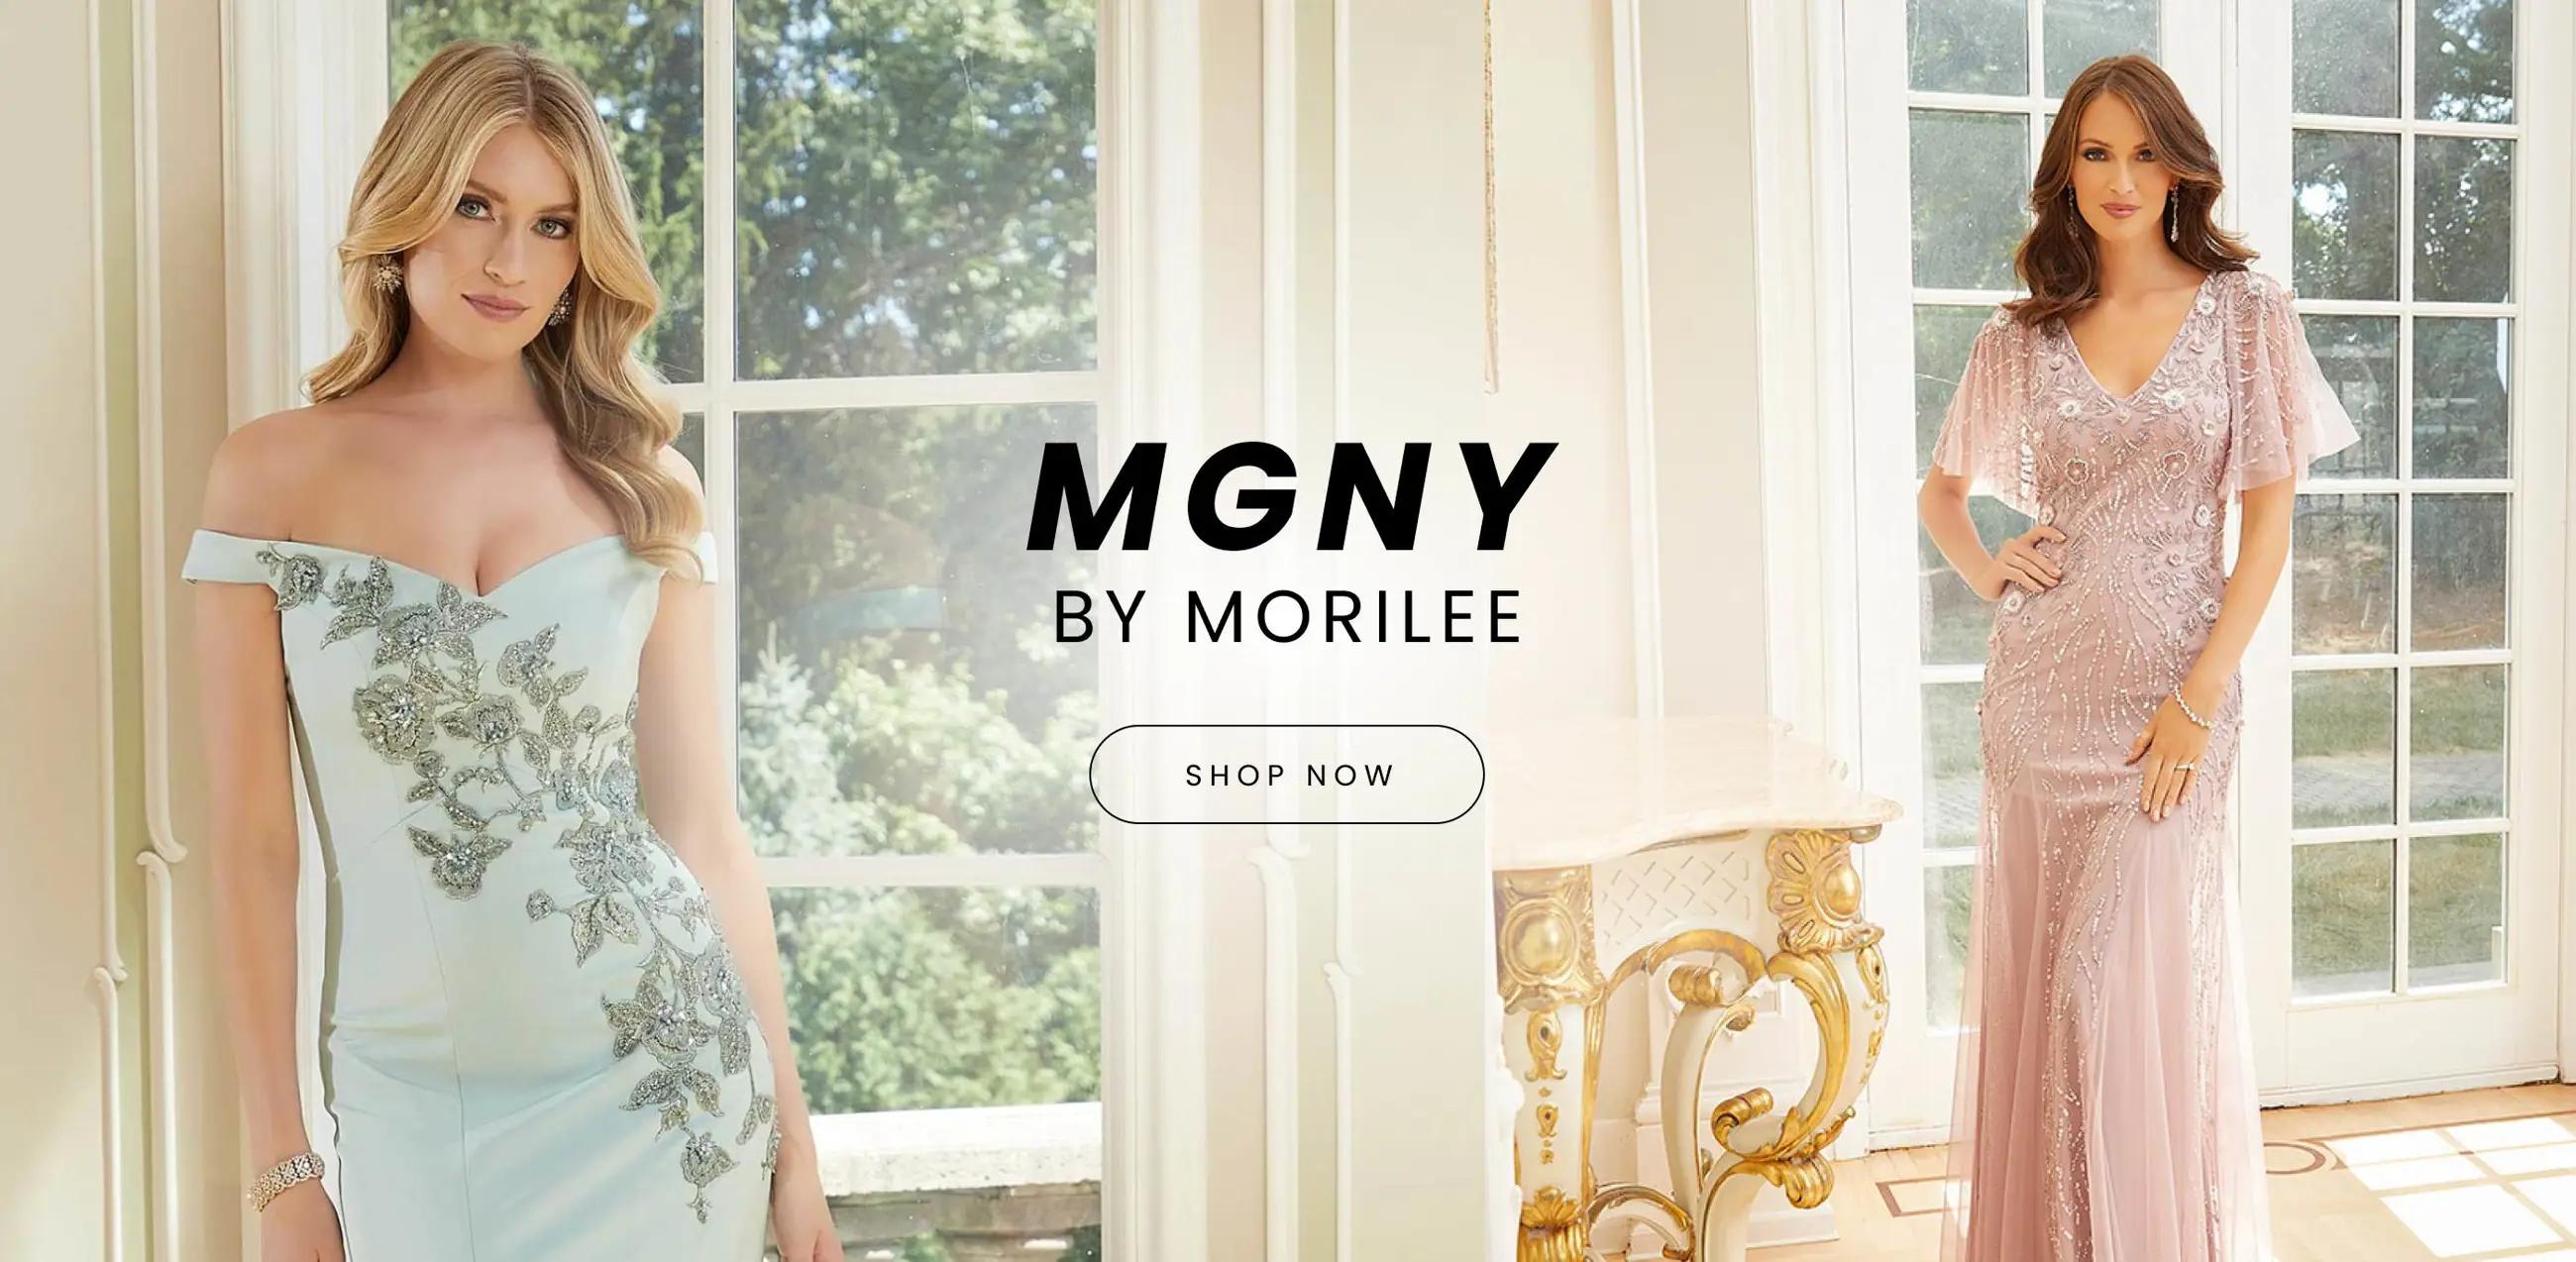 MGNY by Morilee Banner Desktop